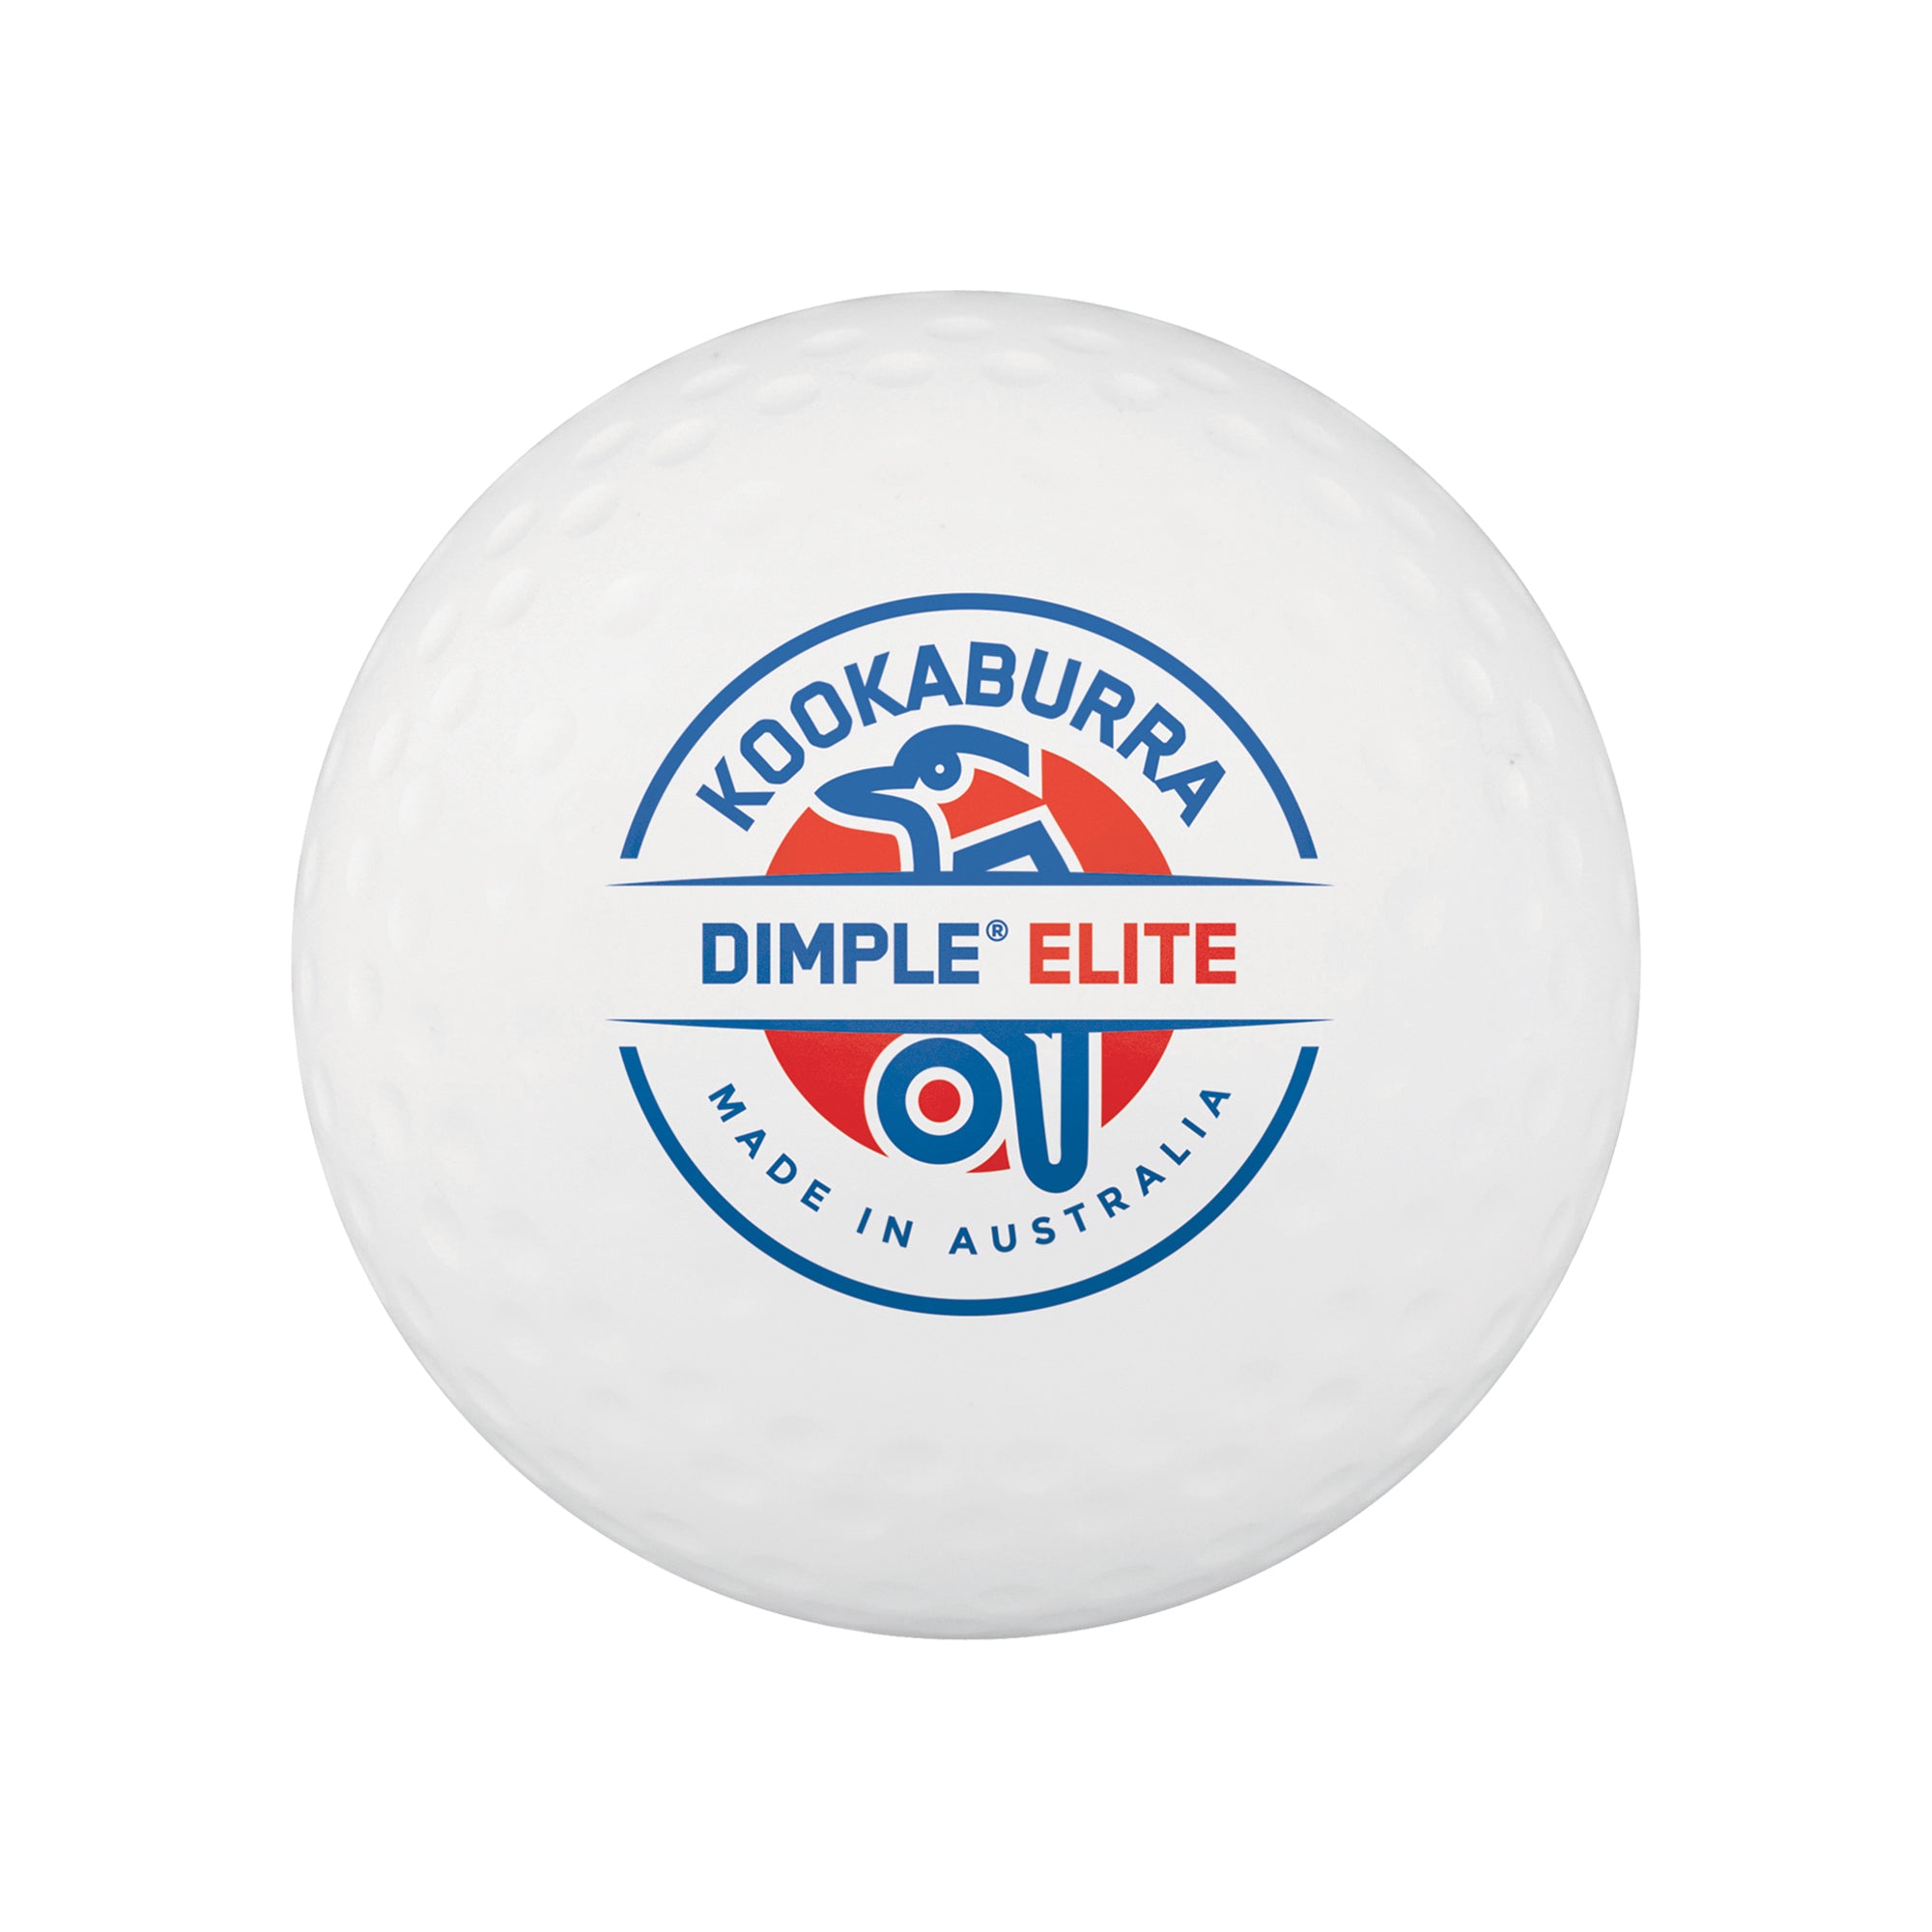 Kookaburra Dimple Elite Hockey Ball - White